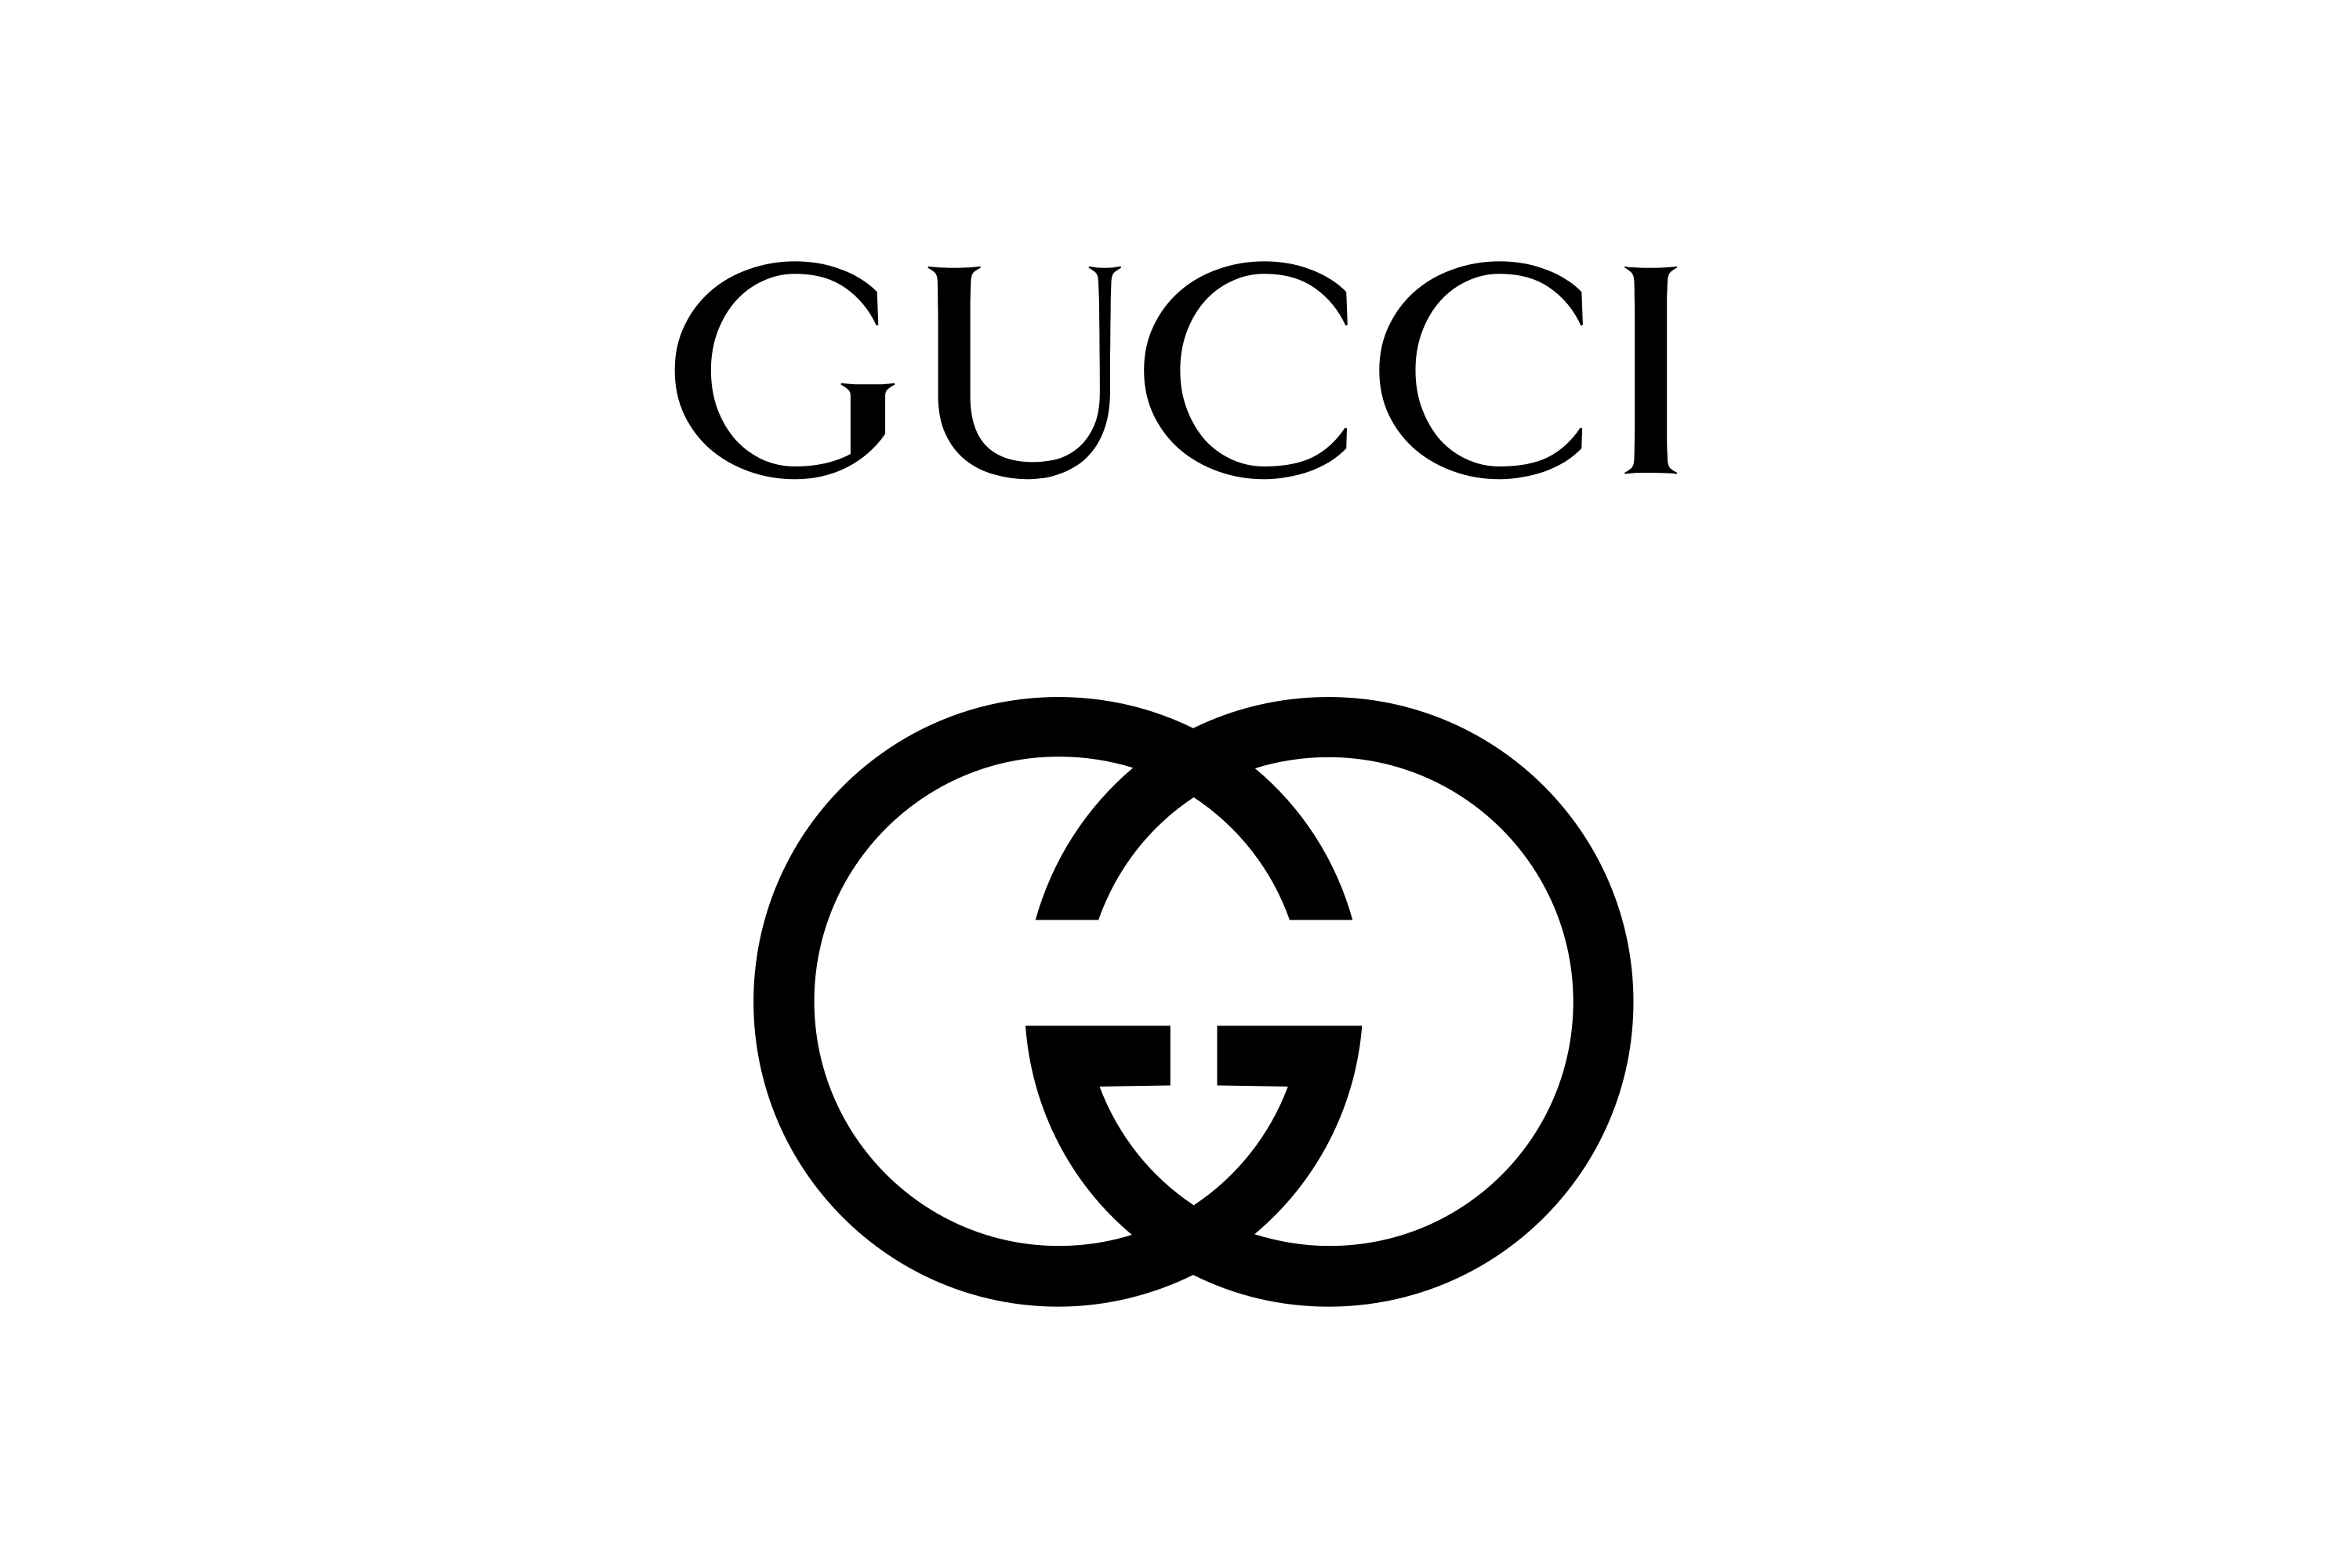 Download Gucci Logo in SVG Vector or PNG File Format - Logo.wine